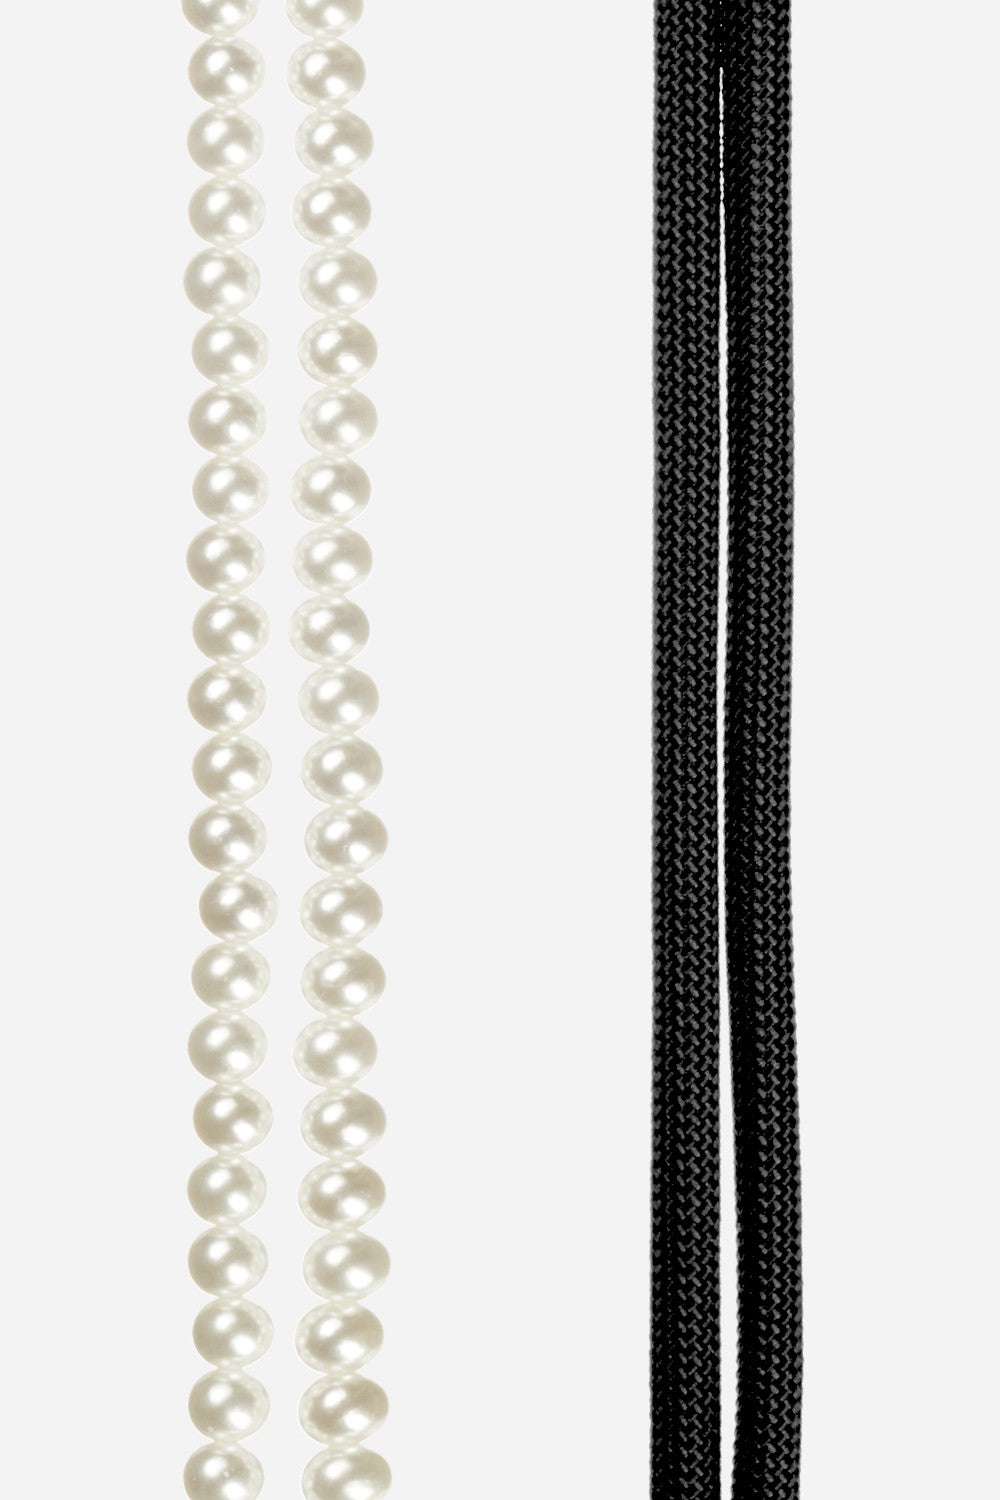 Gigi Long Chain Black 120 cm